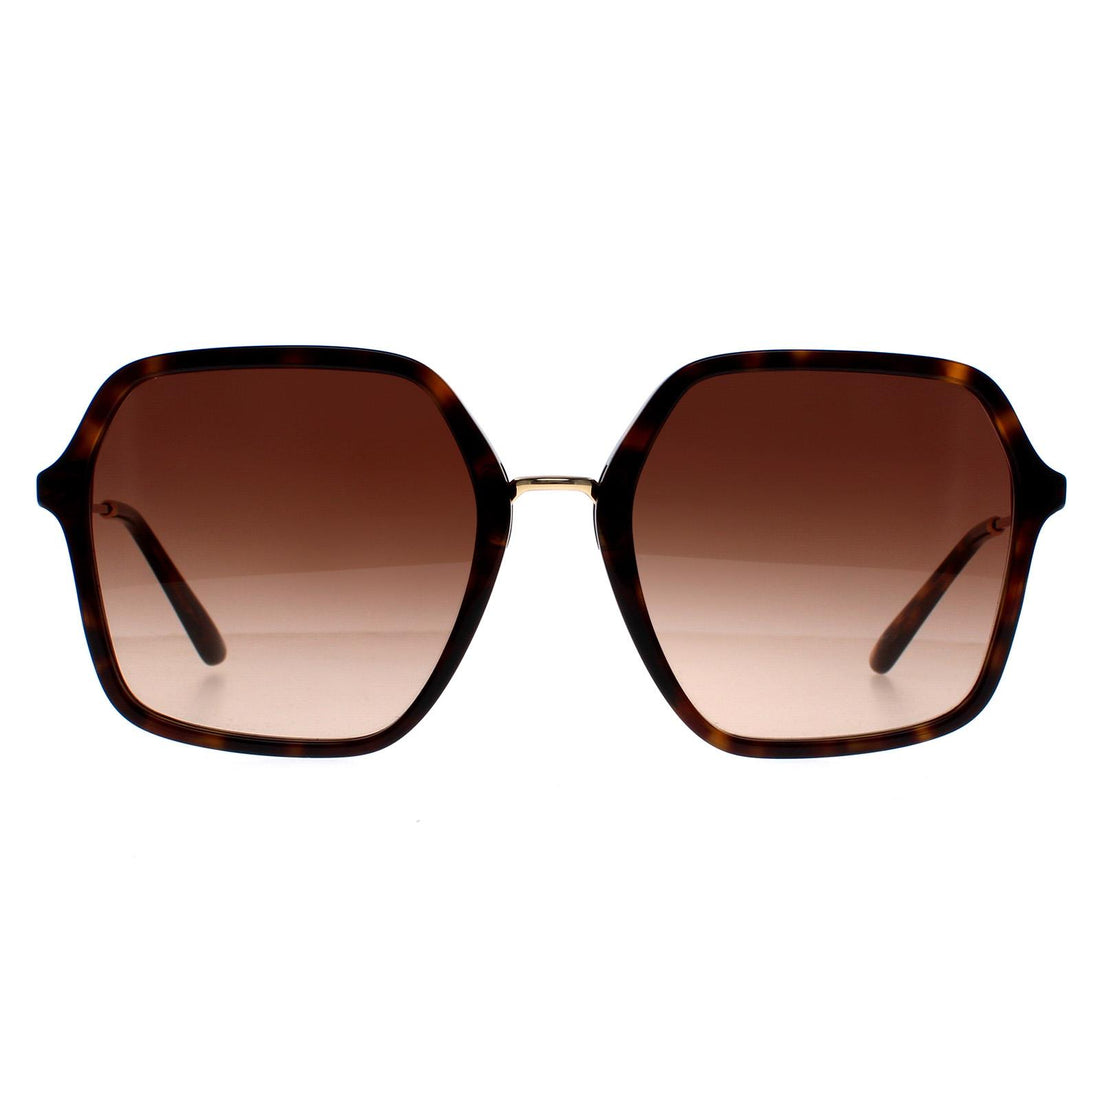 Dolce & Gabbana DG4422 Sunglasses Havana / Brown Gradient